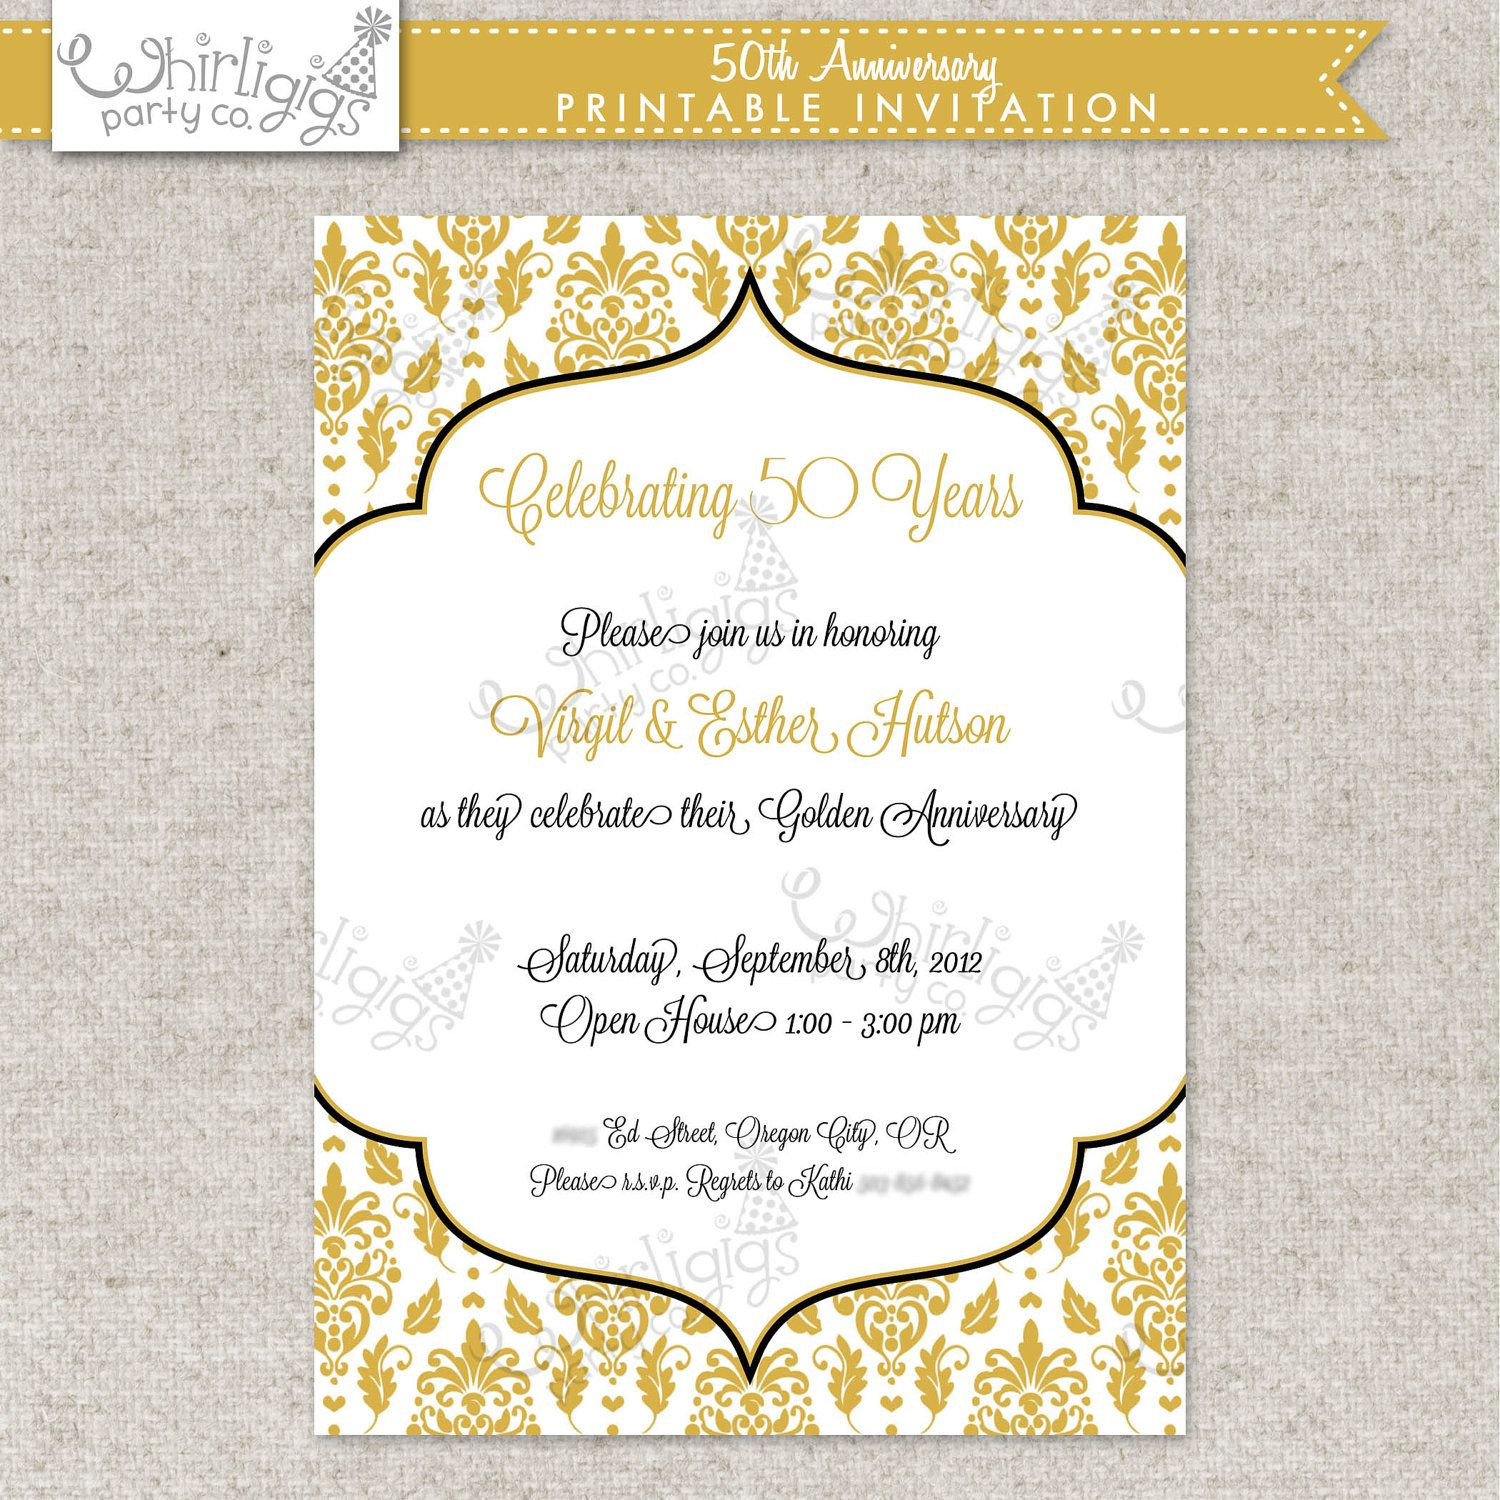 Printable 50th Wedding Anniversary Invitations
 50th Anniversary Invitation Golden Anniversary Invitation